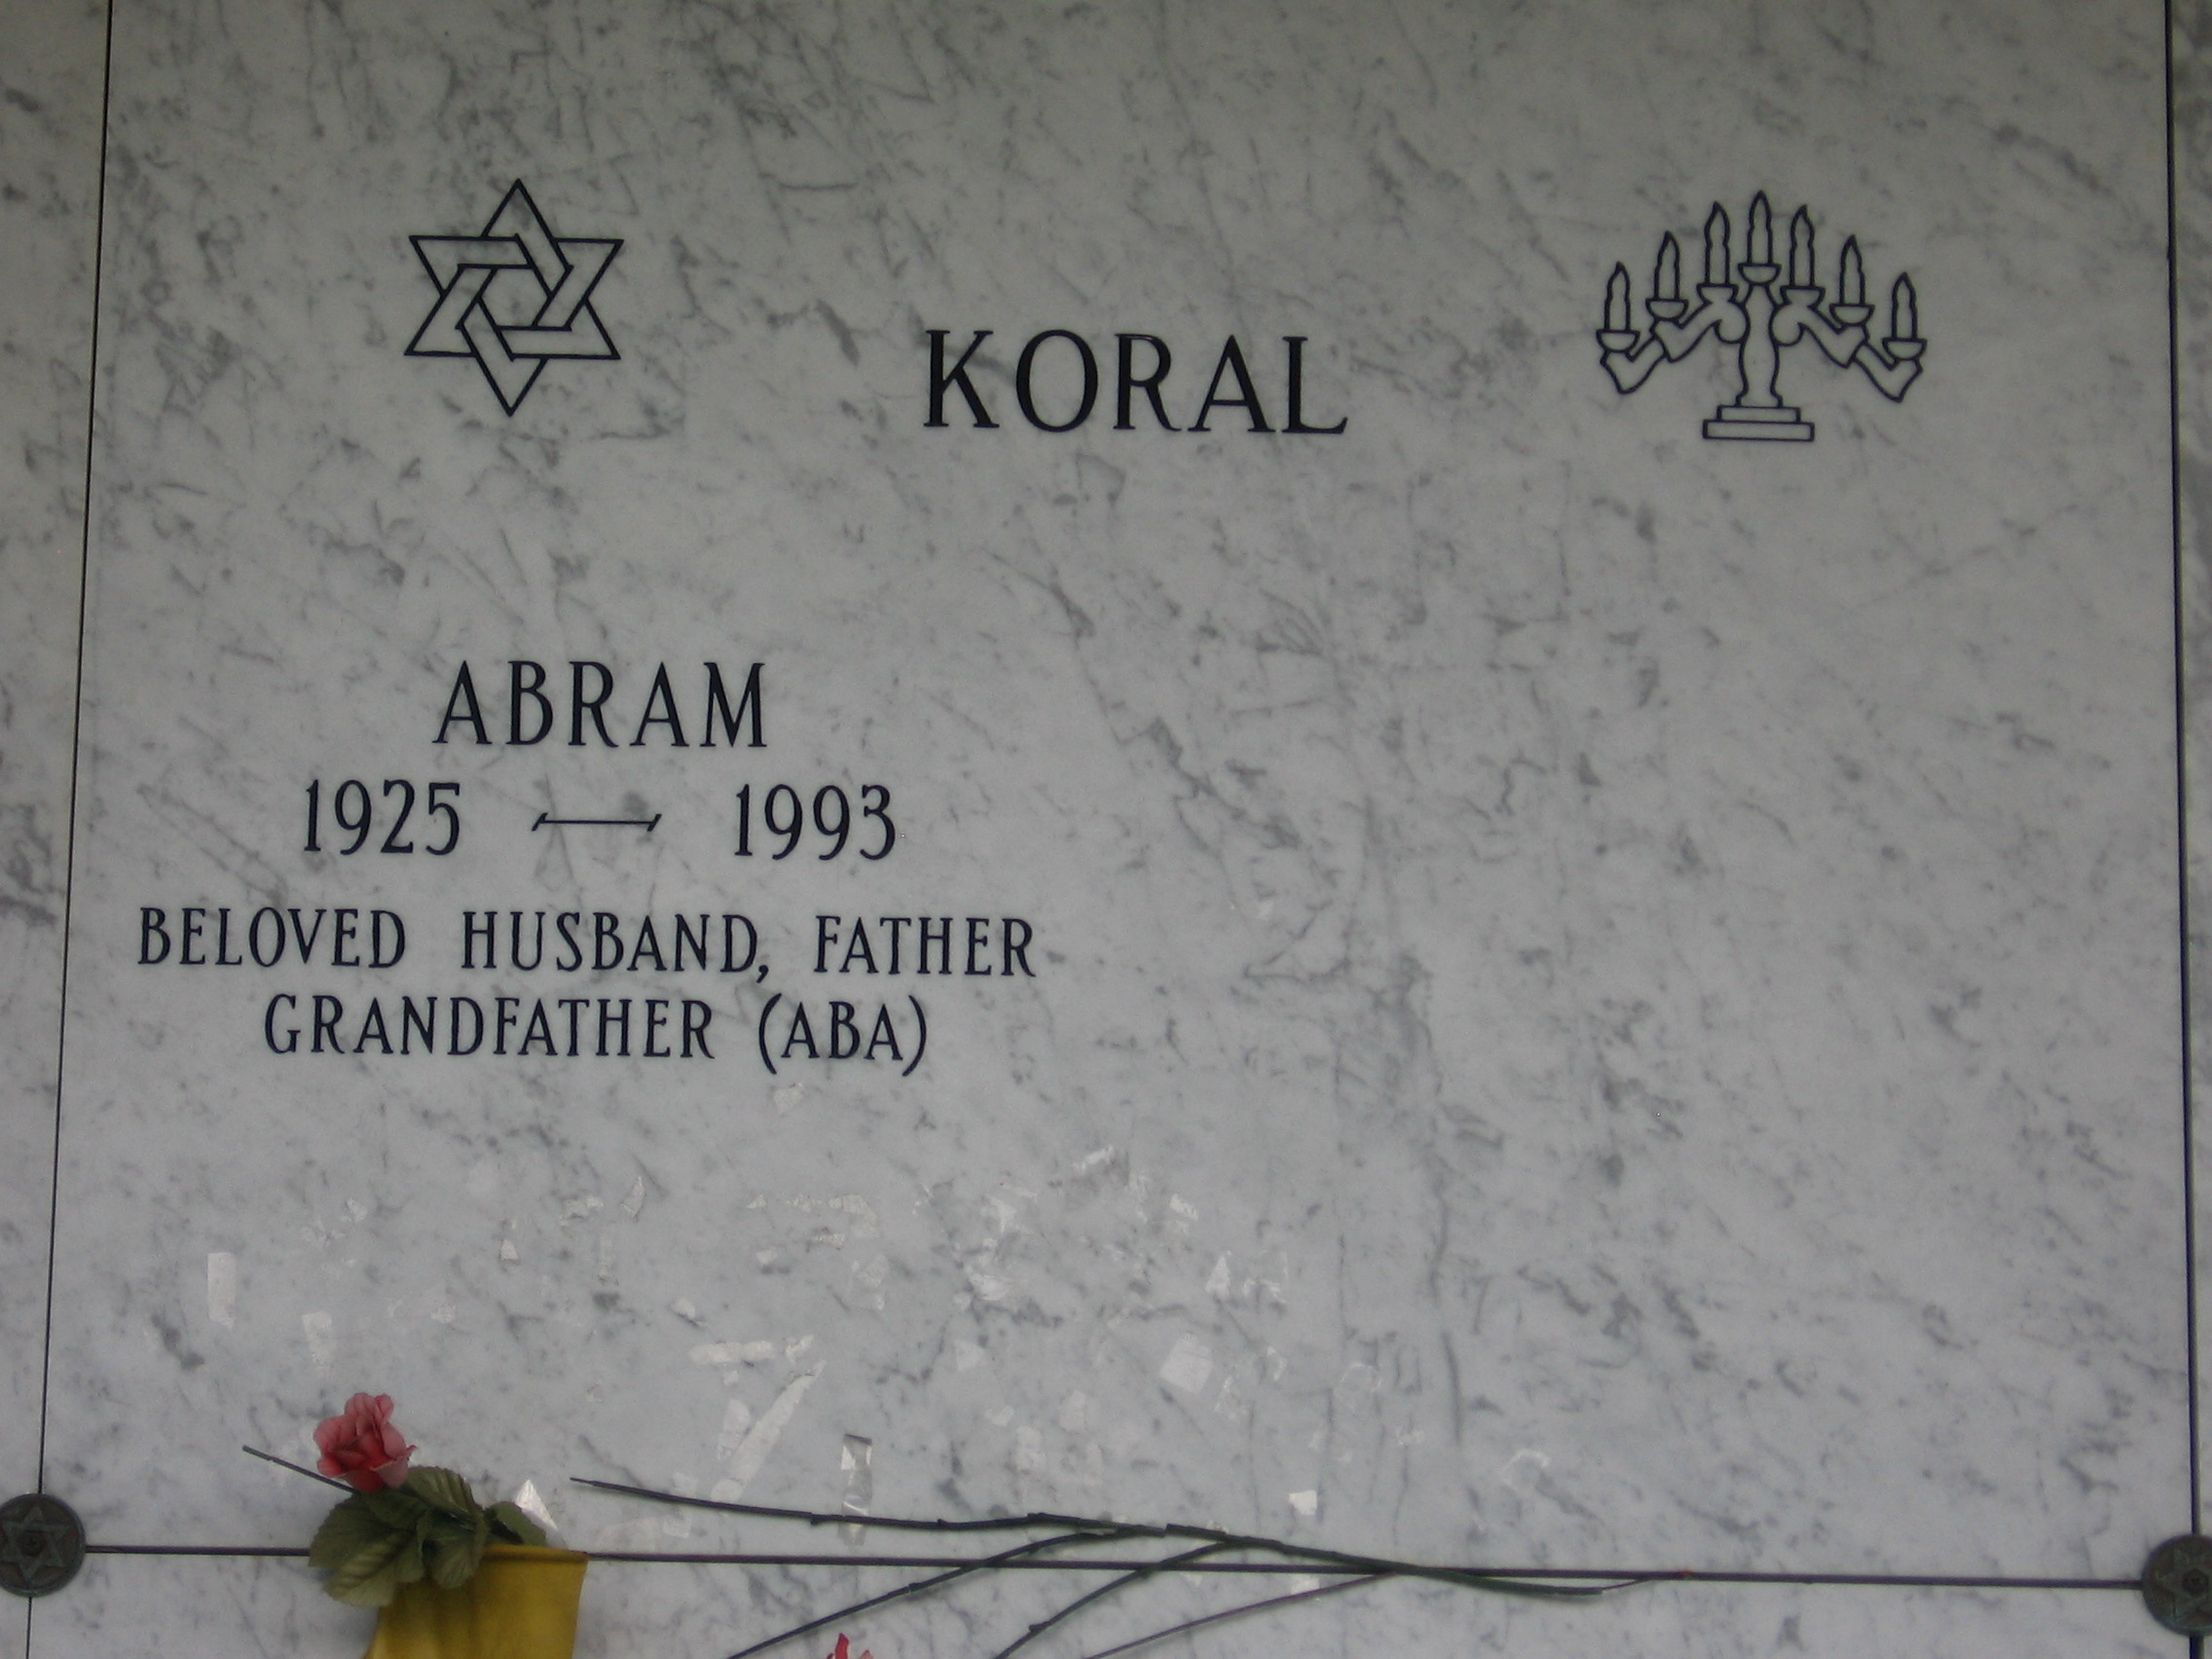 Abram Koral